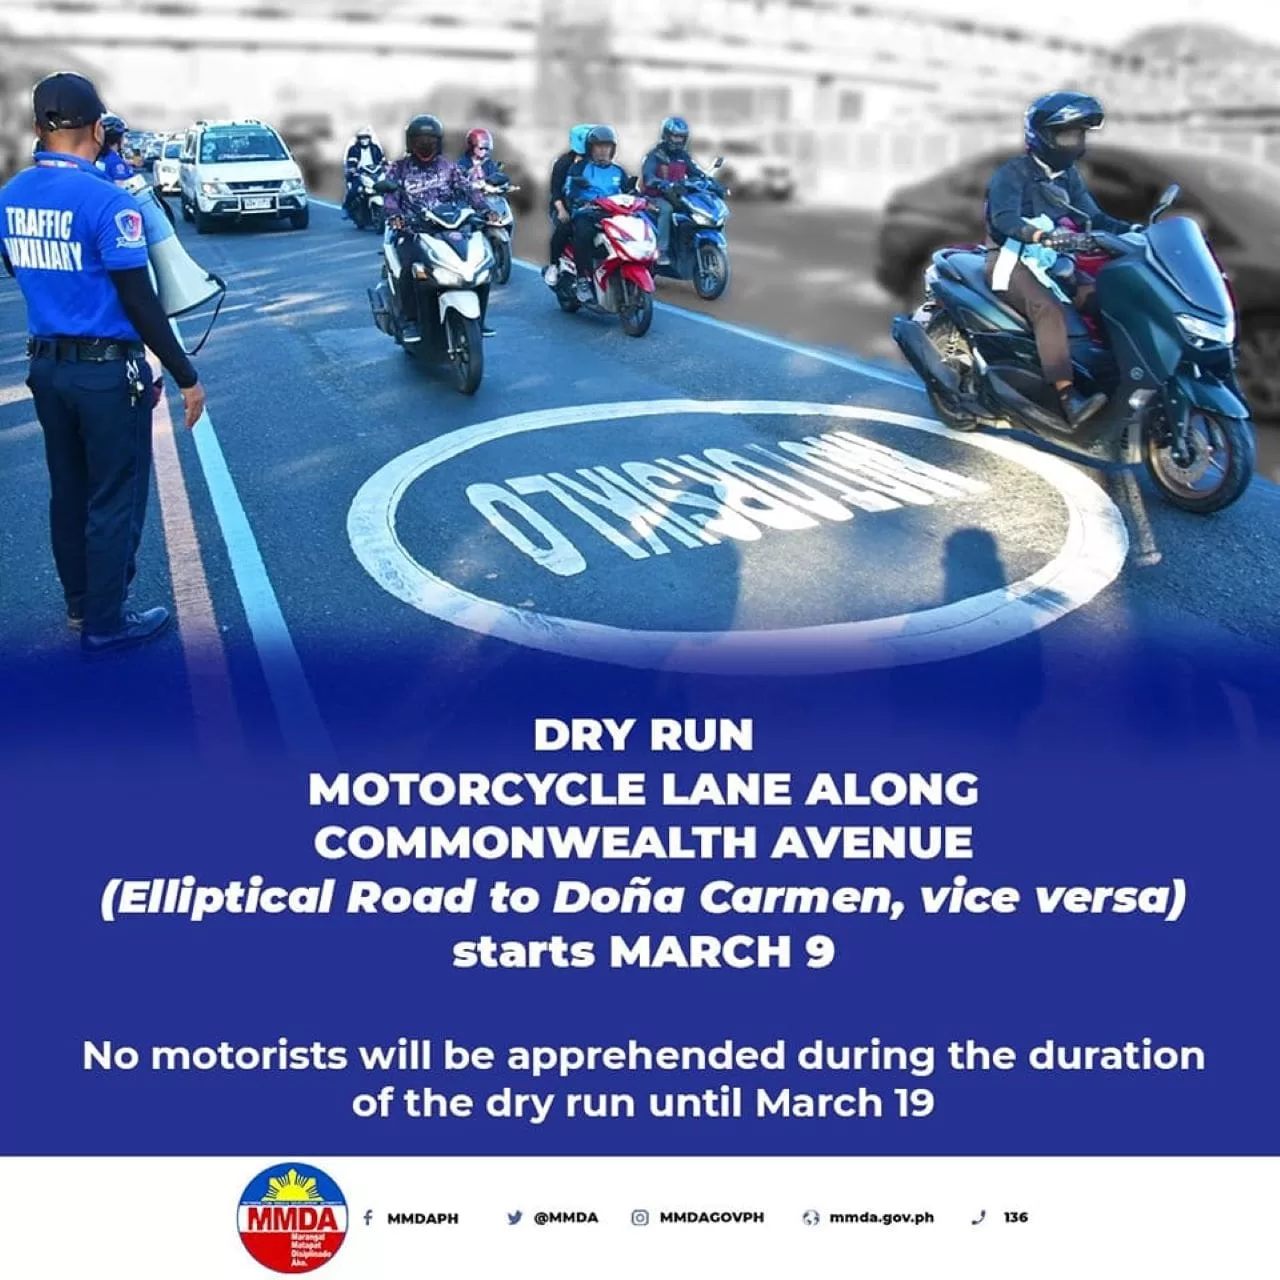 Mmda Commonwealth Motorcycle Lane Dry Run Inline 01 Min